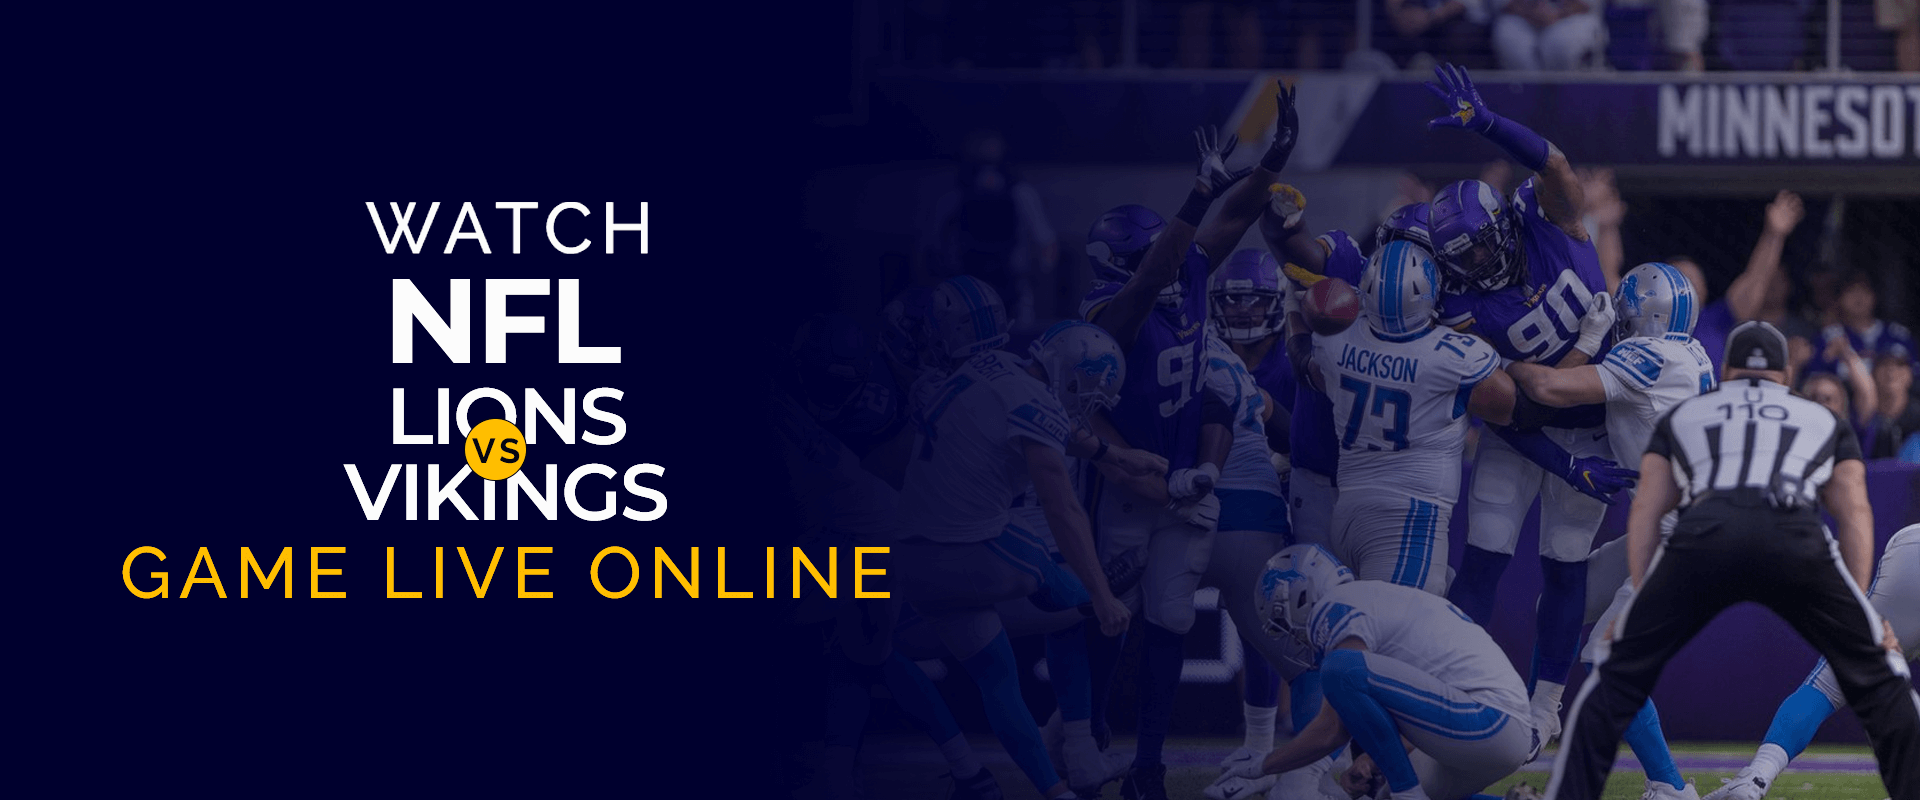 Смотрите игру NFL Lions Vs Vikings в прямом эфире онлайн